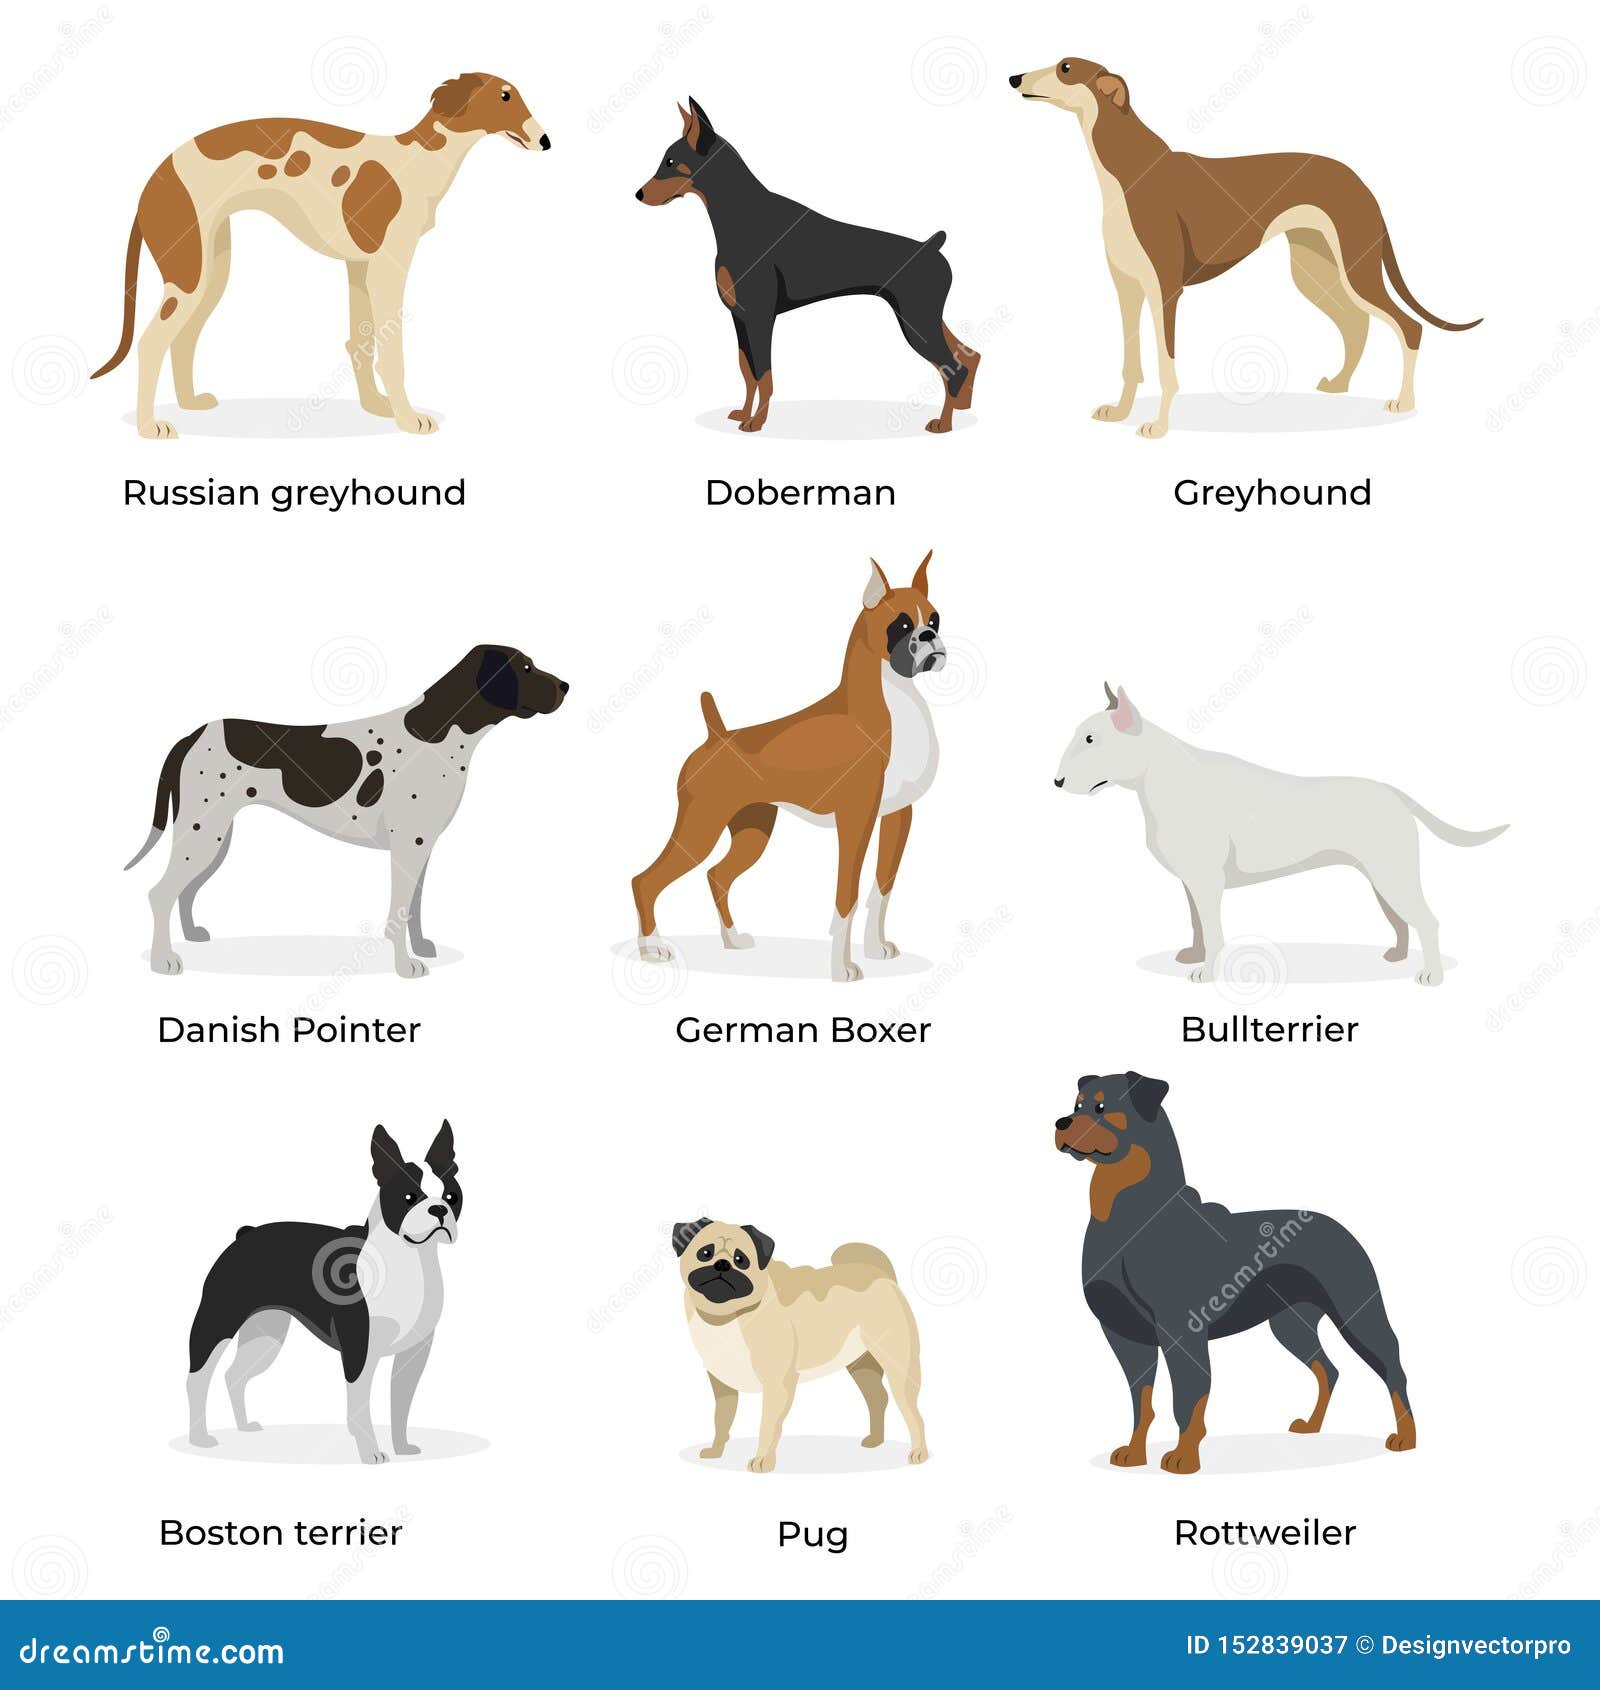 dog breeds similar to doberman